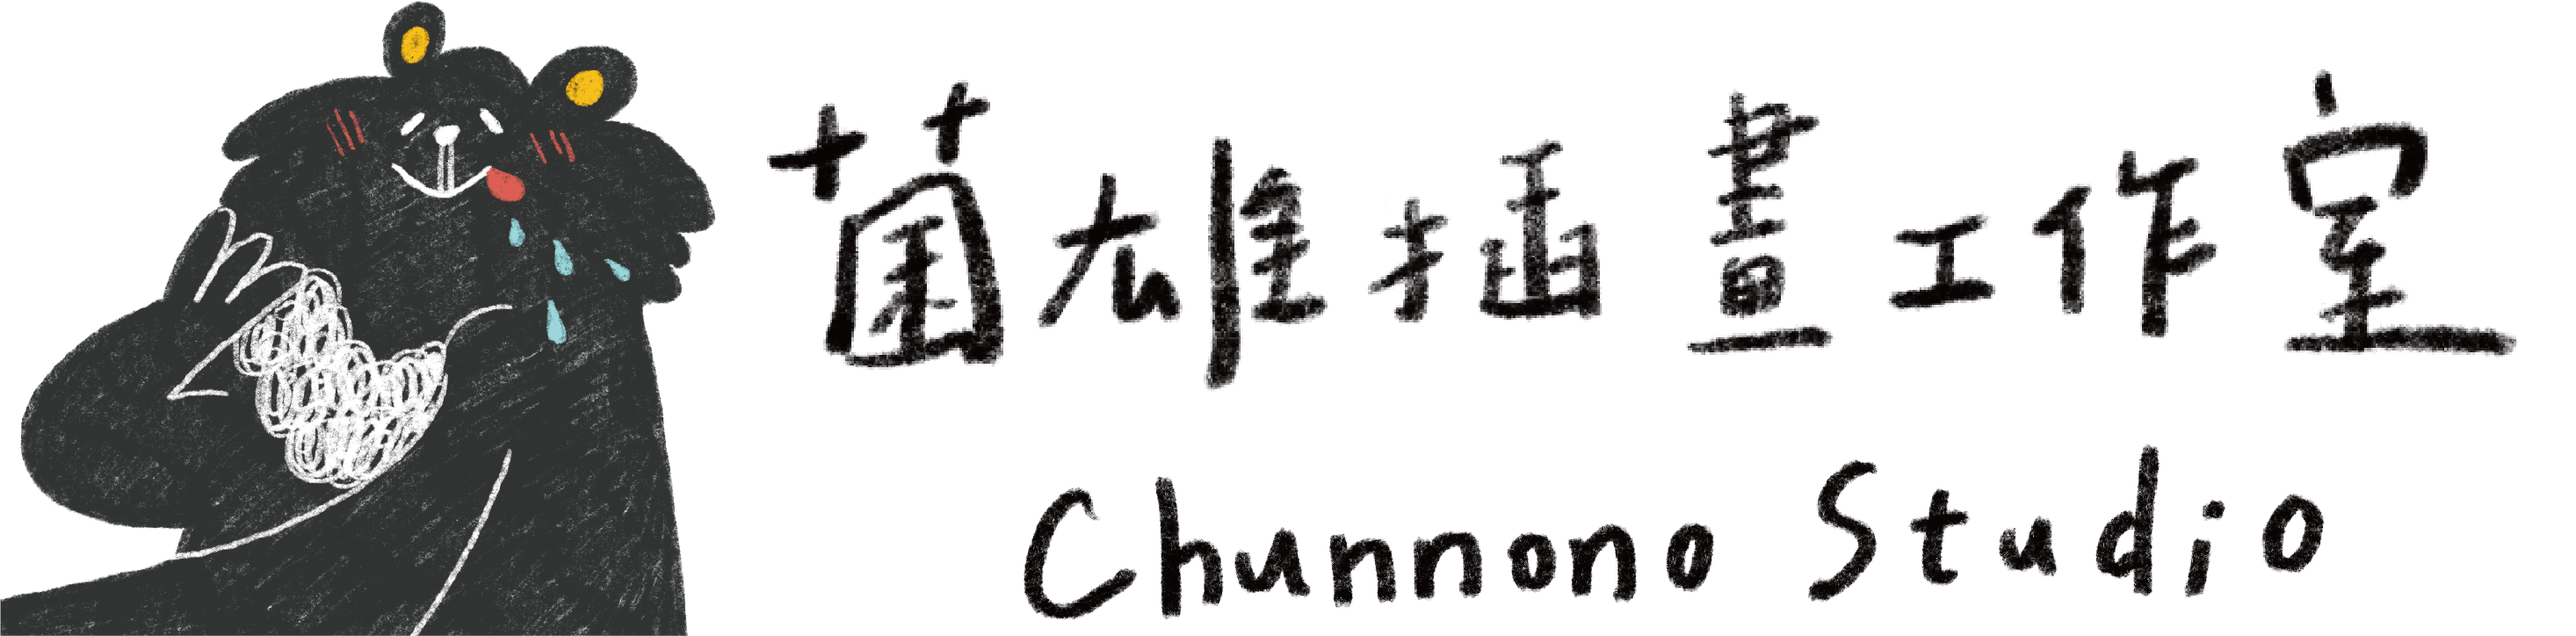 ChunnonoStudio